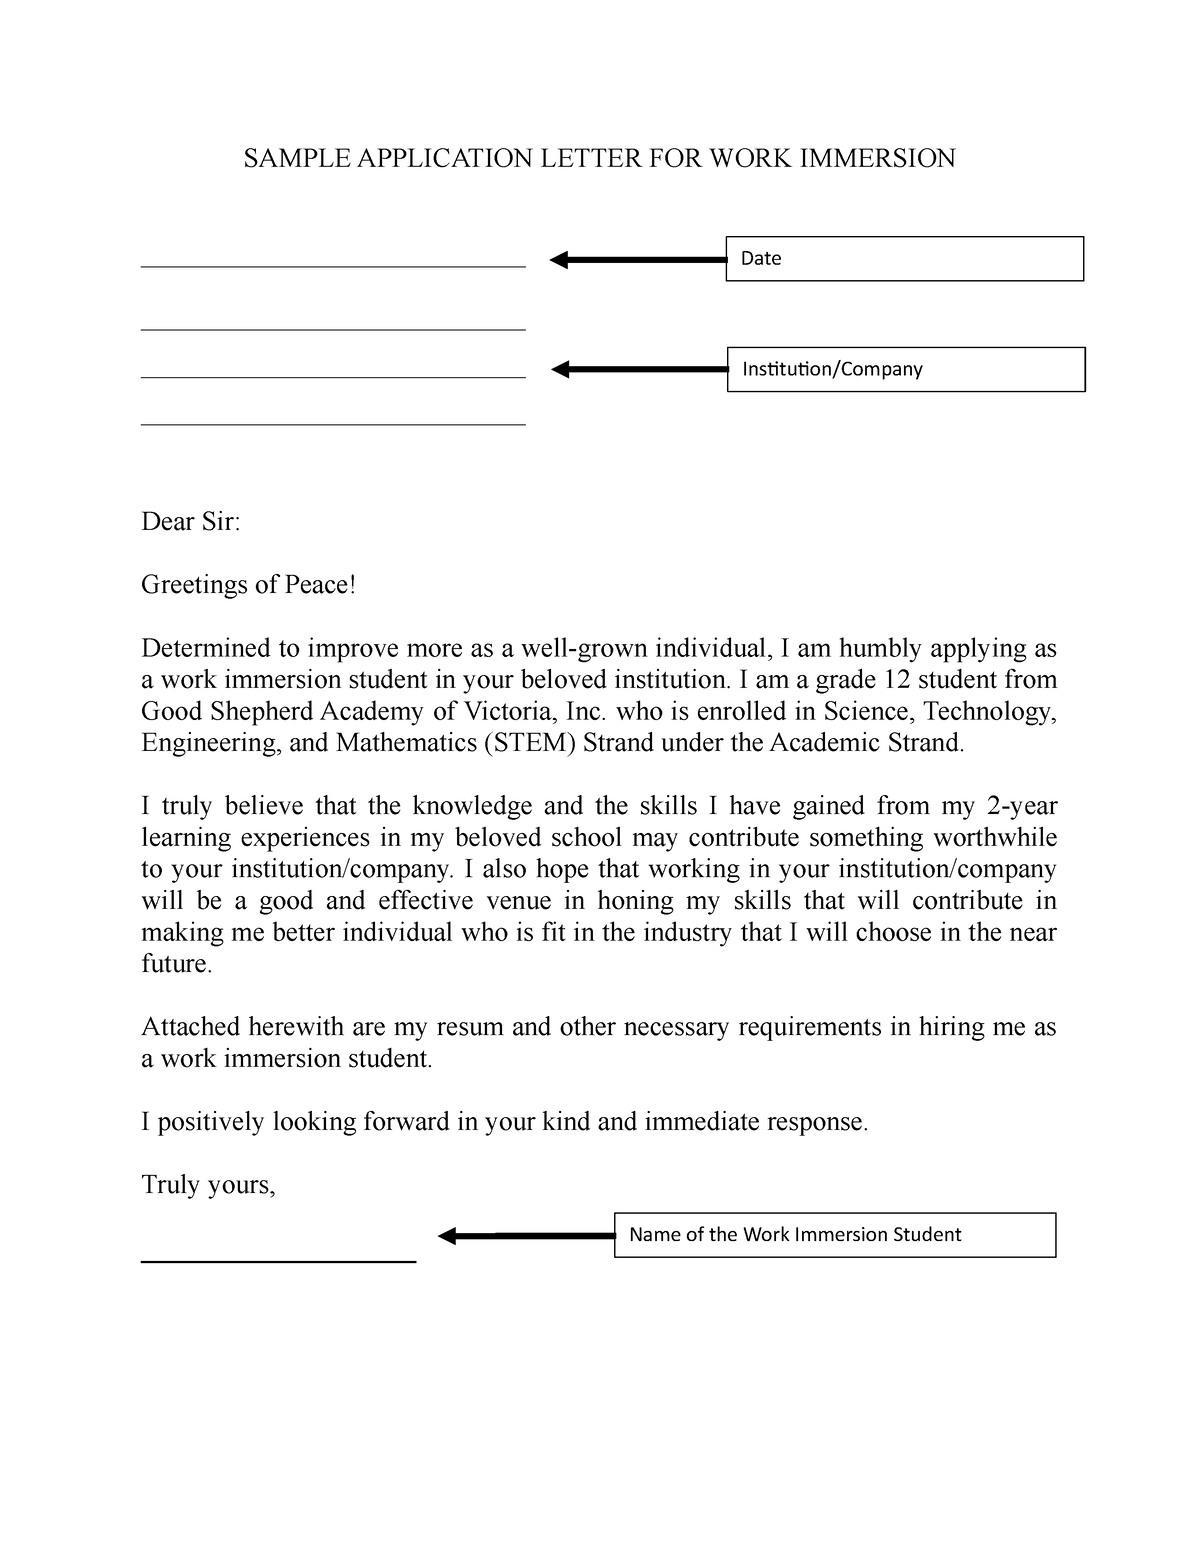 sample application letter for work immersion stem student